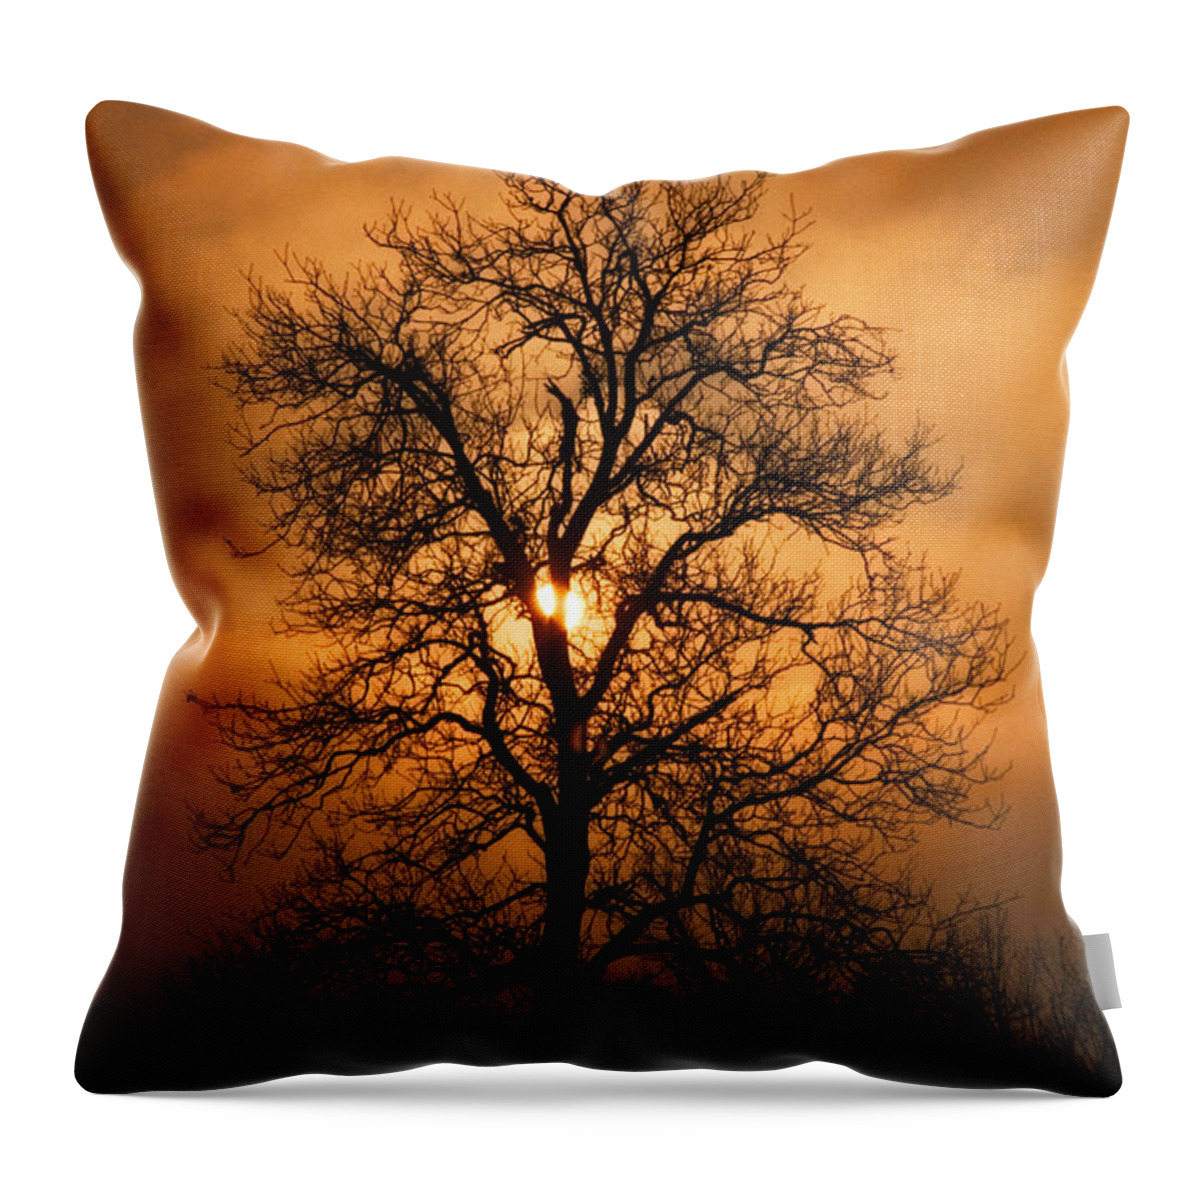 Art Throw Pillow featuring the photograph Oak Tree Sunburst by Michael Dougherty